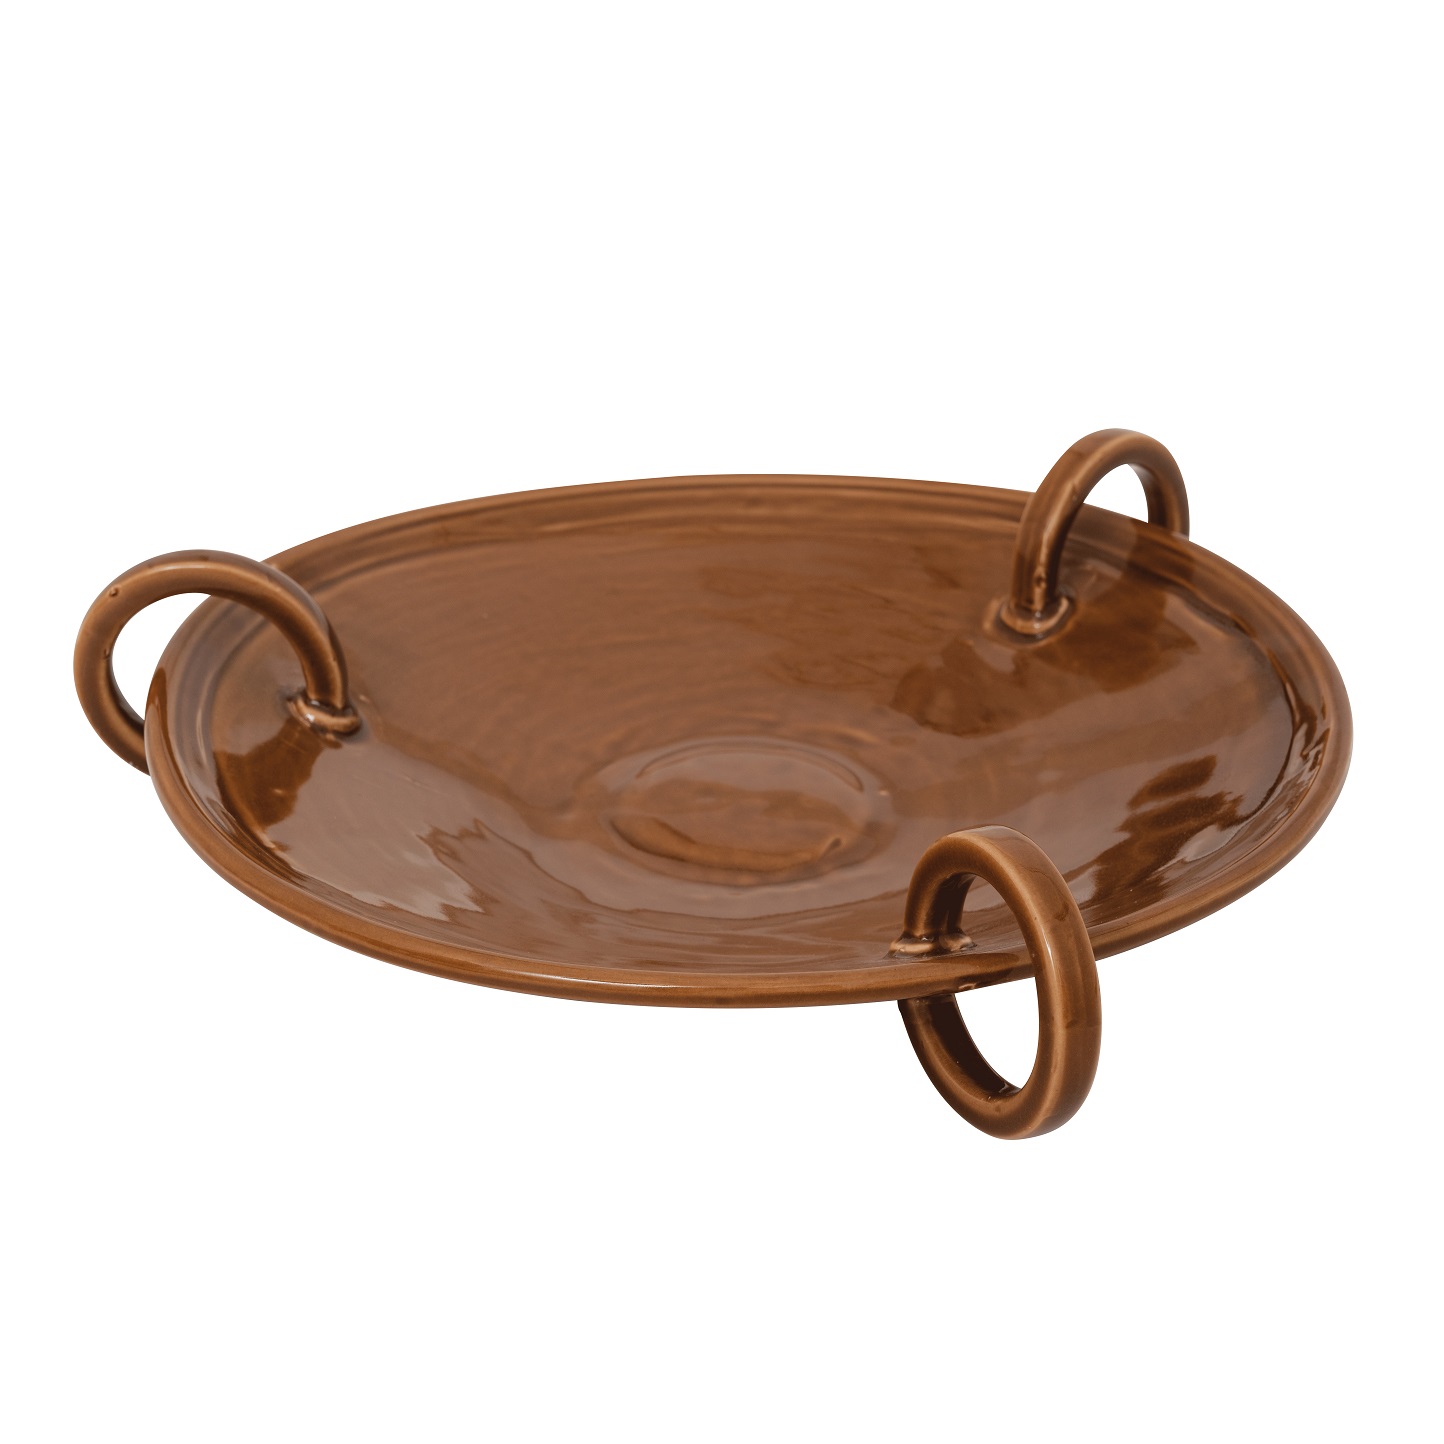 Unc Decorative Bowl Woodrush Gift